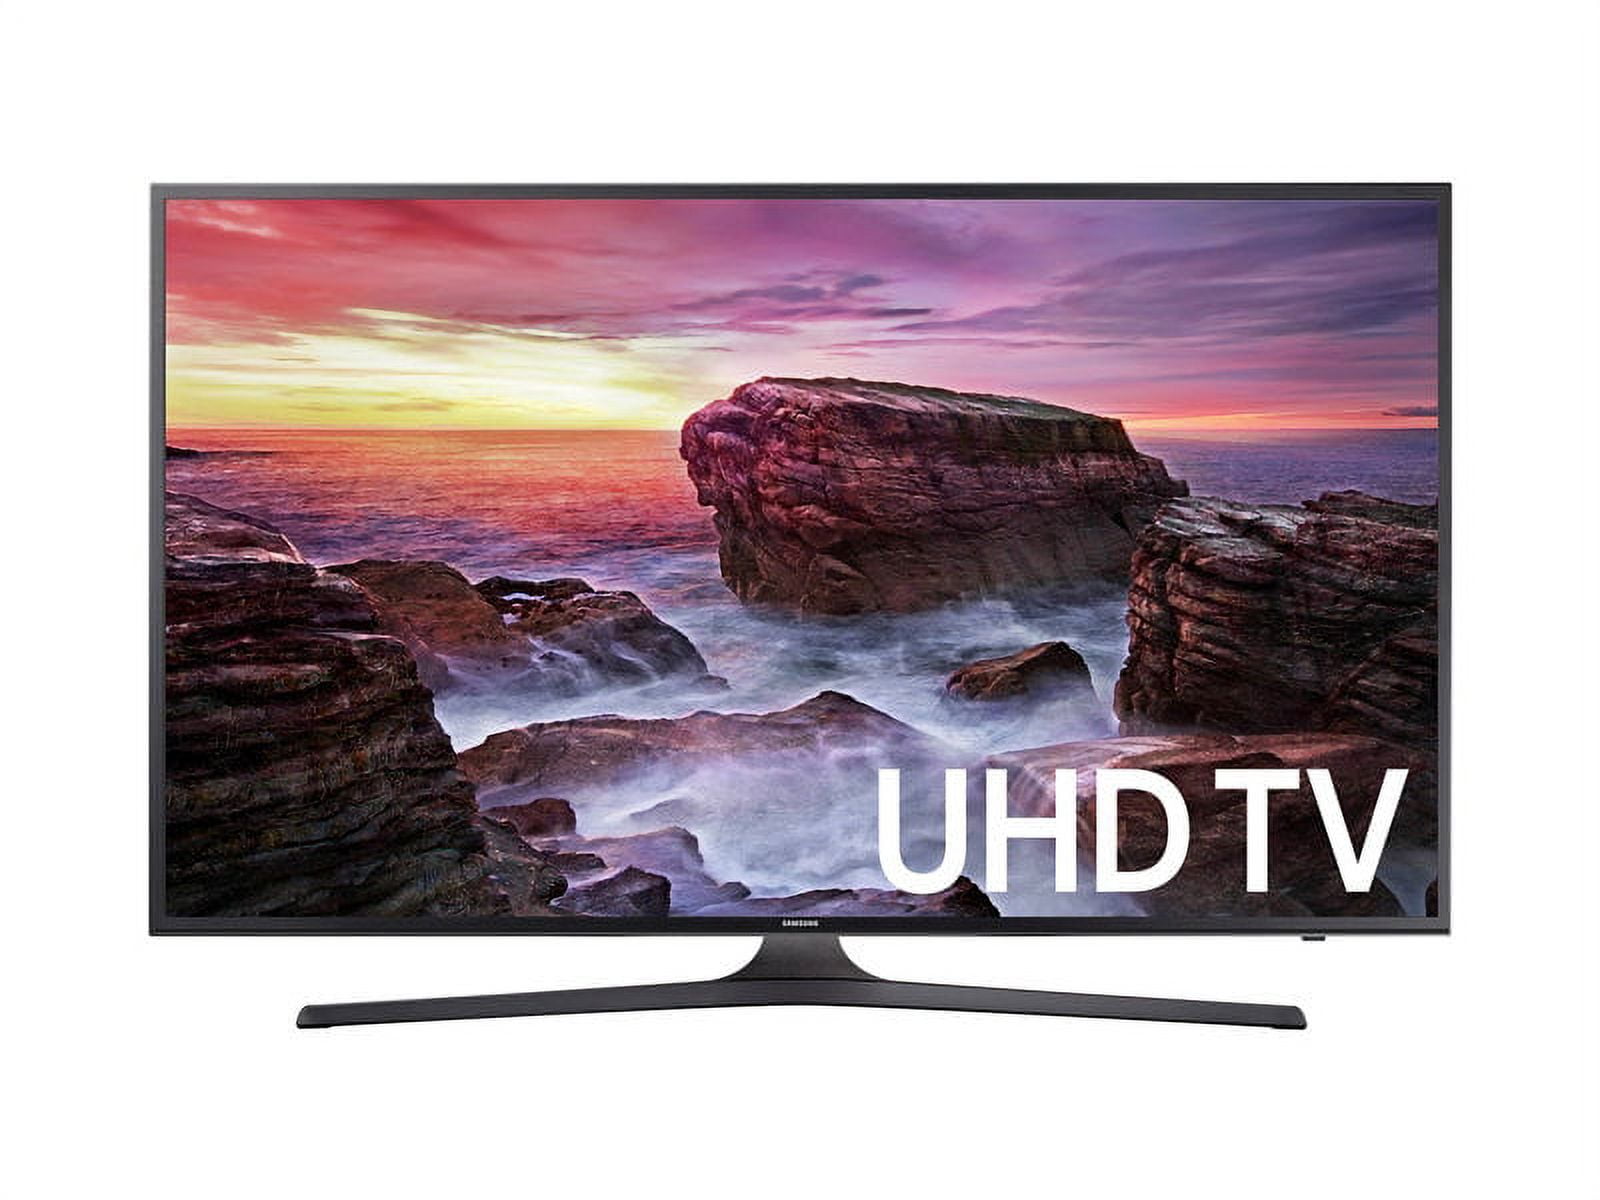 LED 55 Samsung UN55AU7090 Smart TV 4K Ultra HD